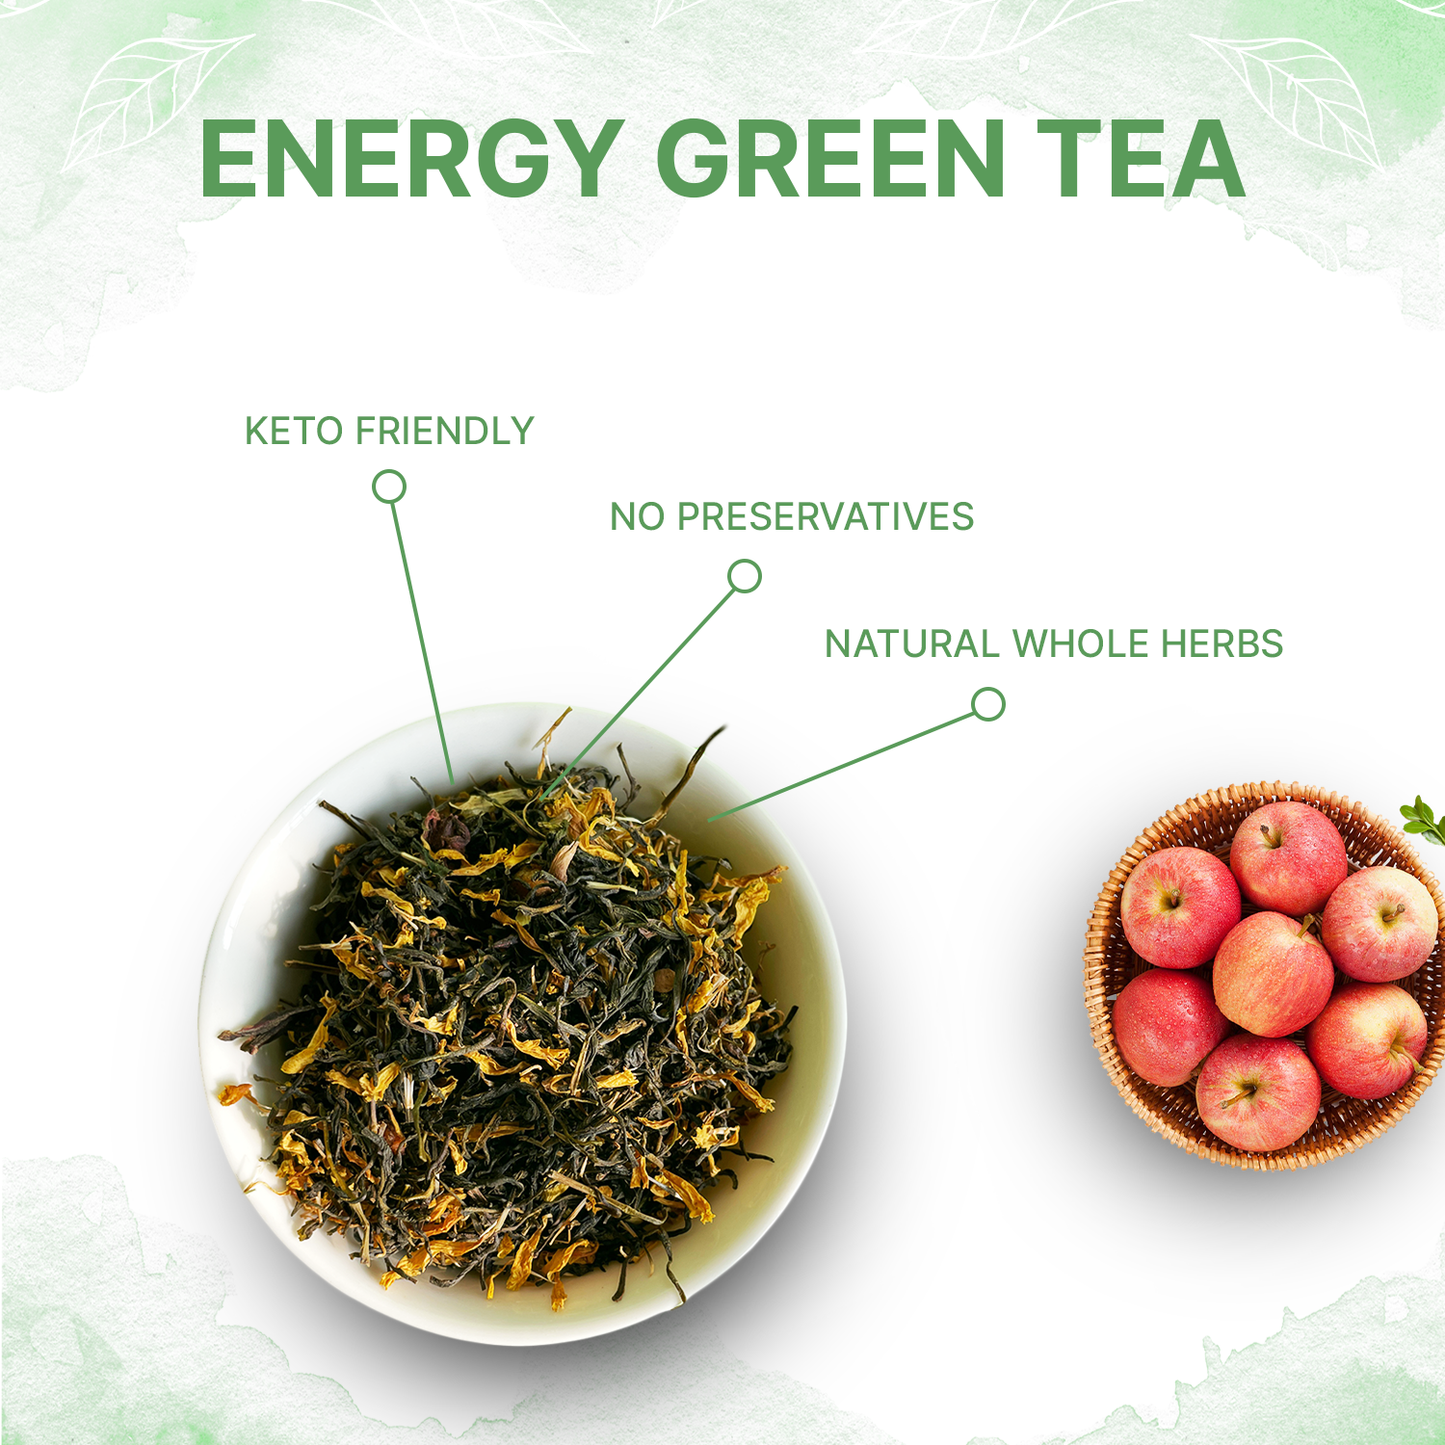 ENERGY GREEN TEA